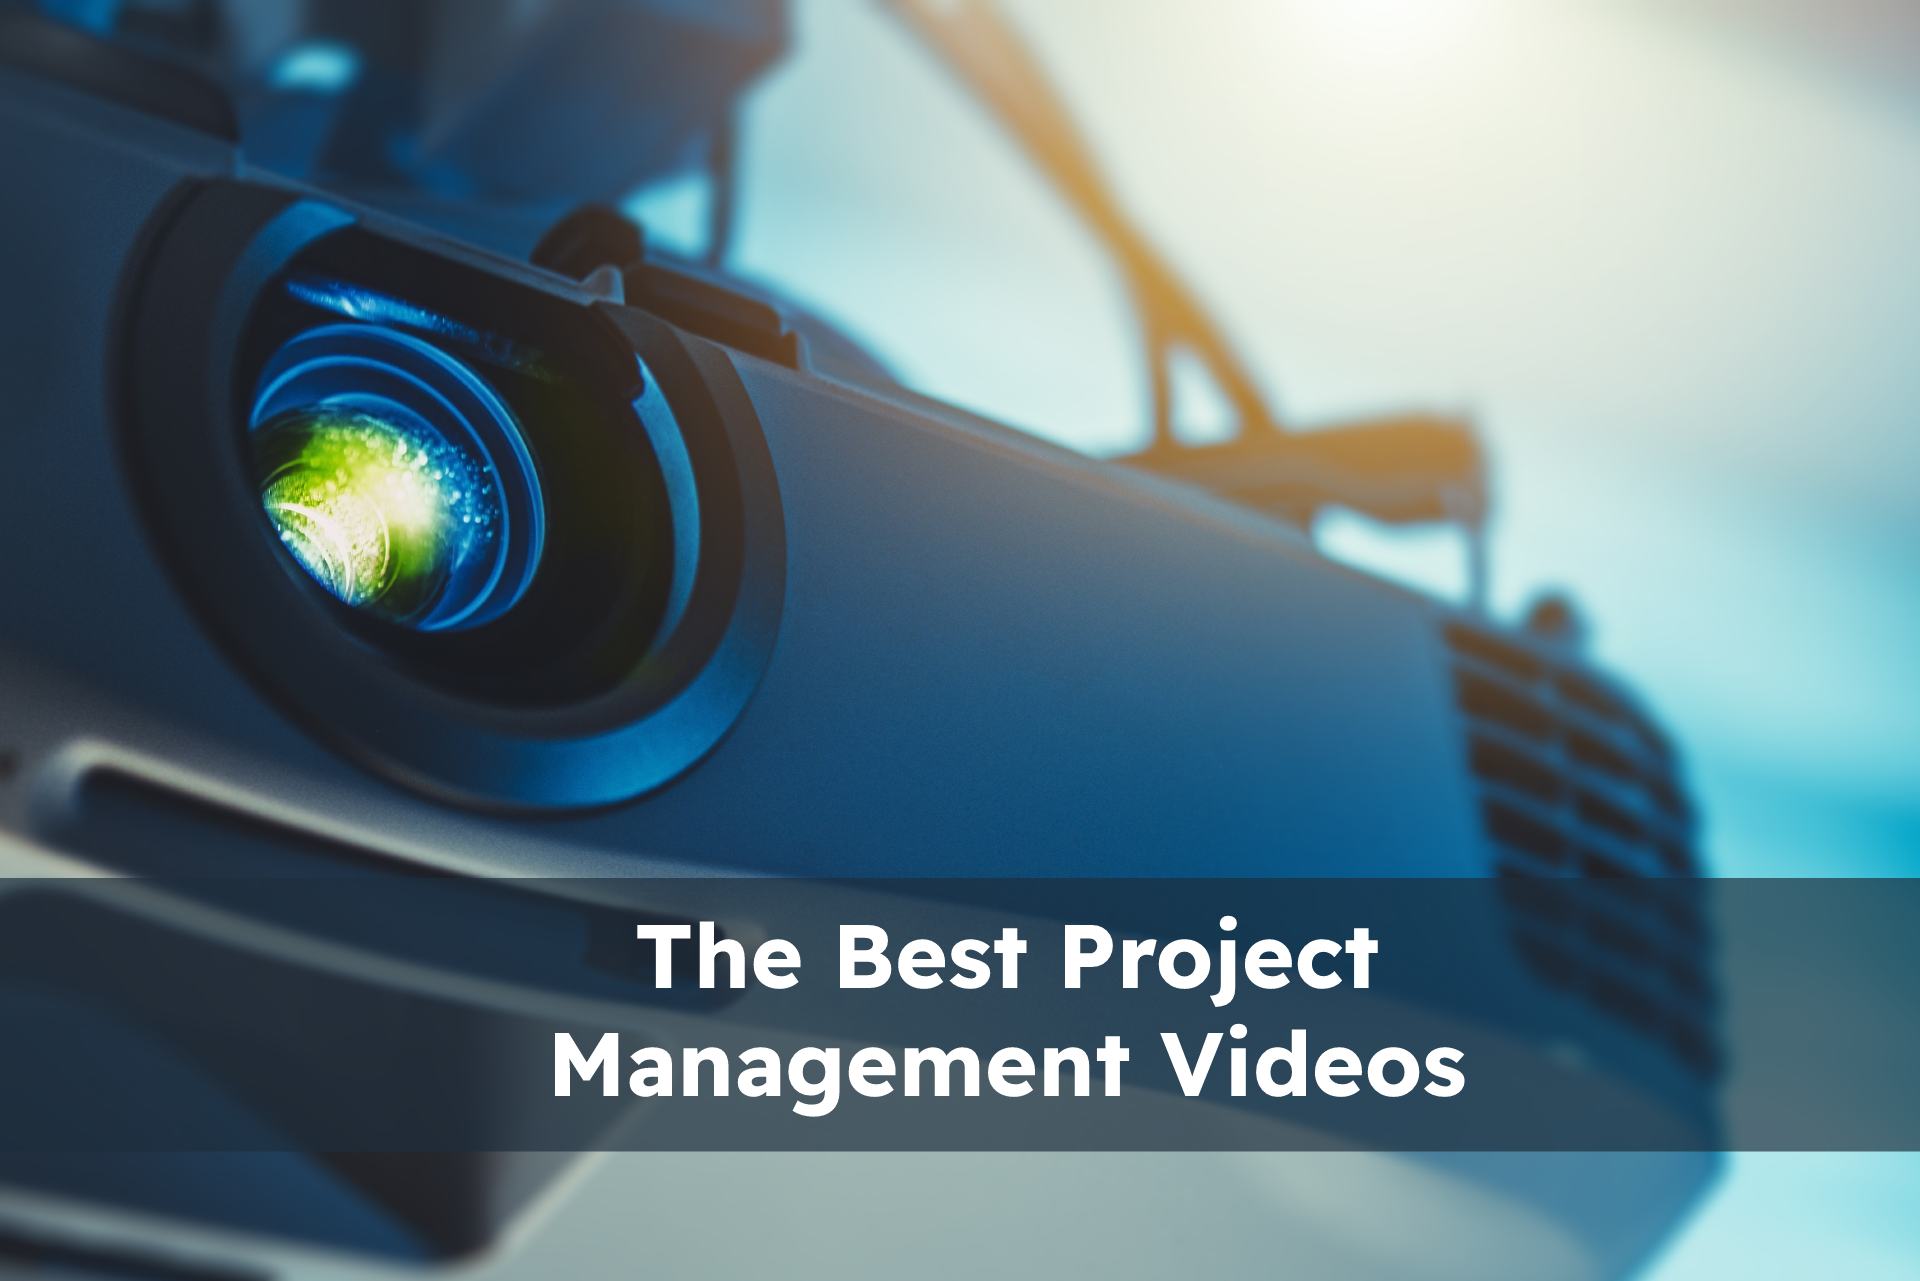 Project management videos